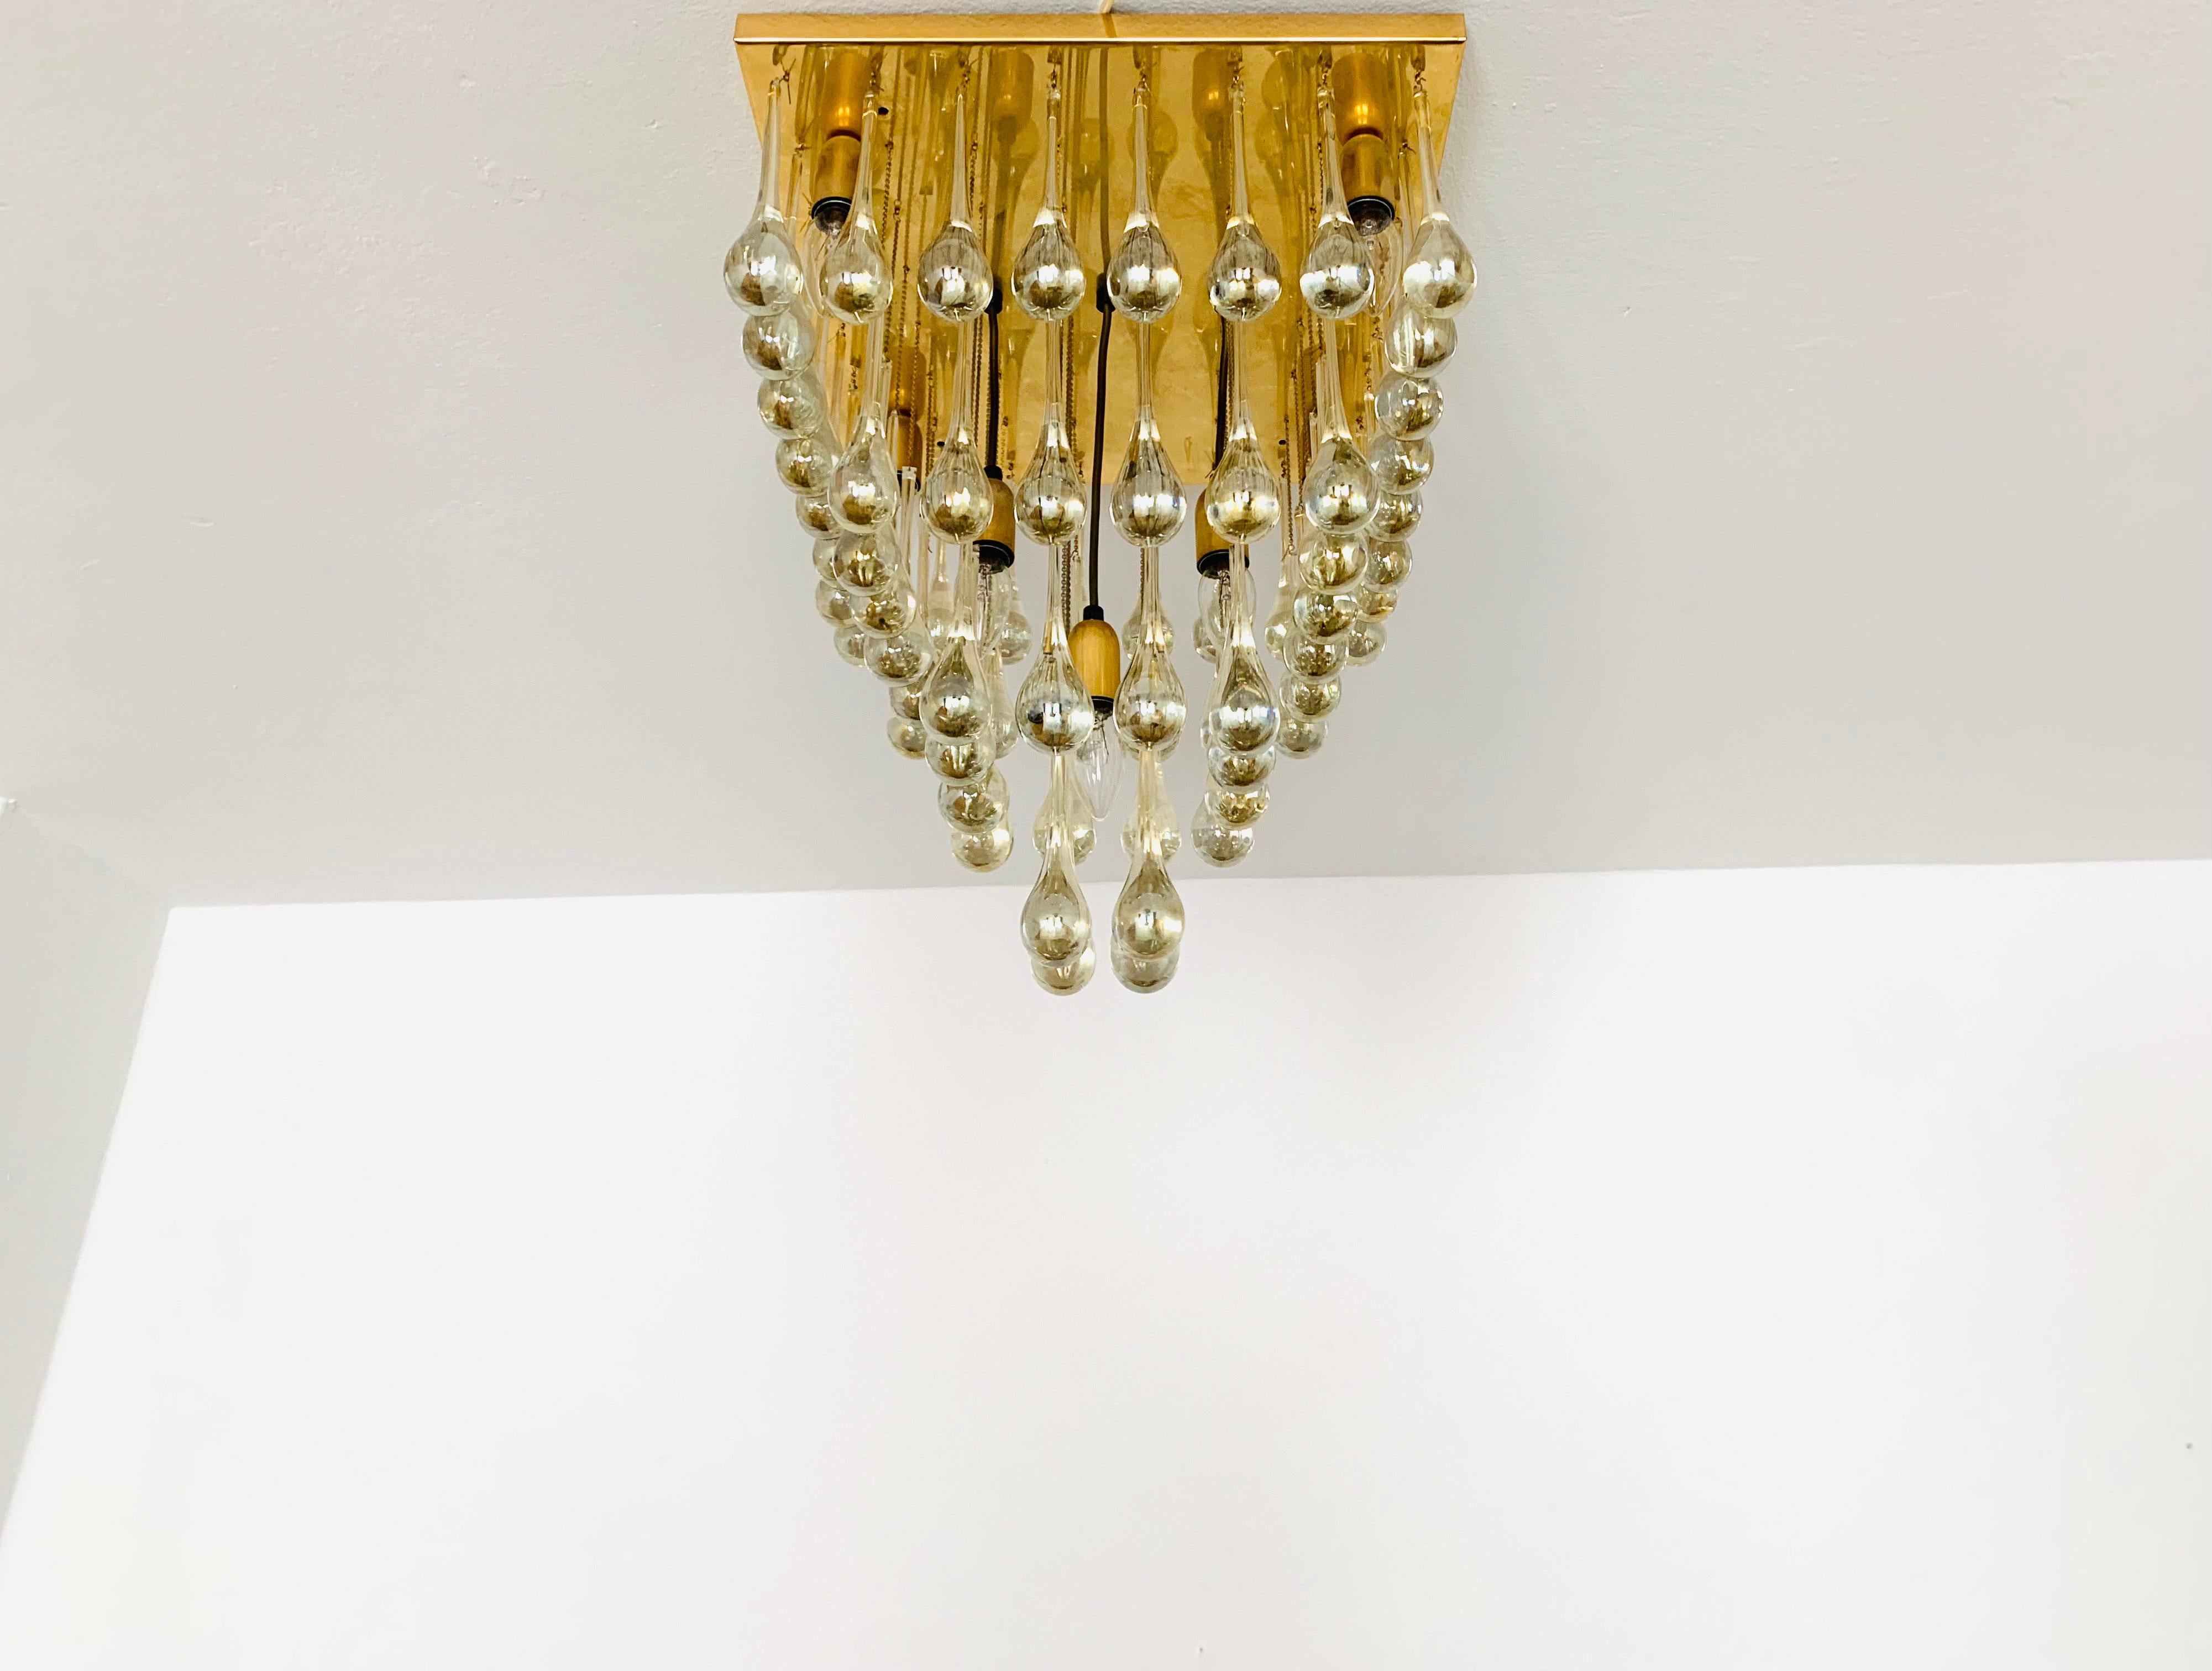 Ceiling chandelier by Ernst Palme In Good Condition For Sale In München, DE